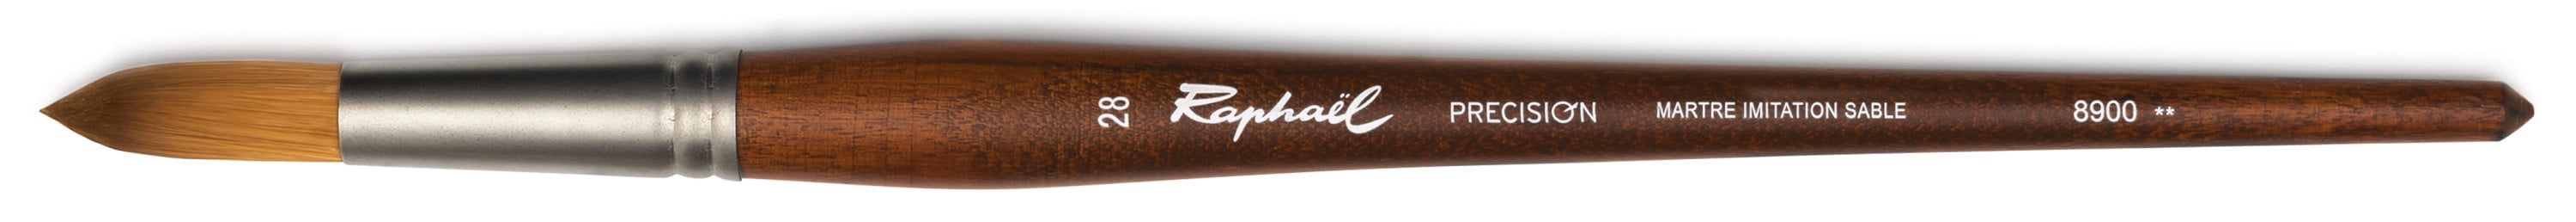 Raphael Precision Long Handle Brushes Round 28 